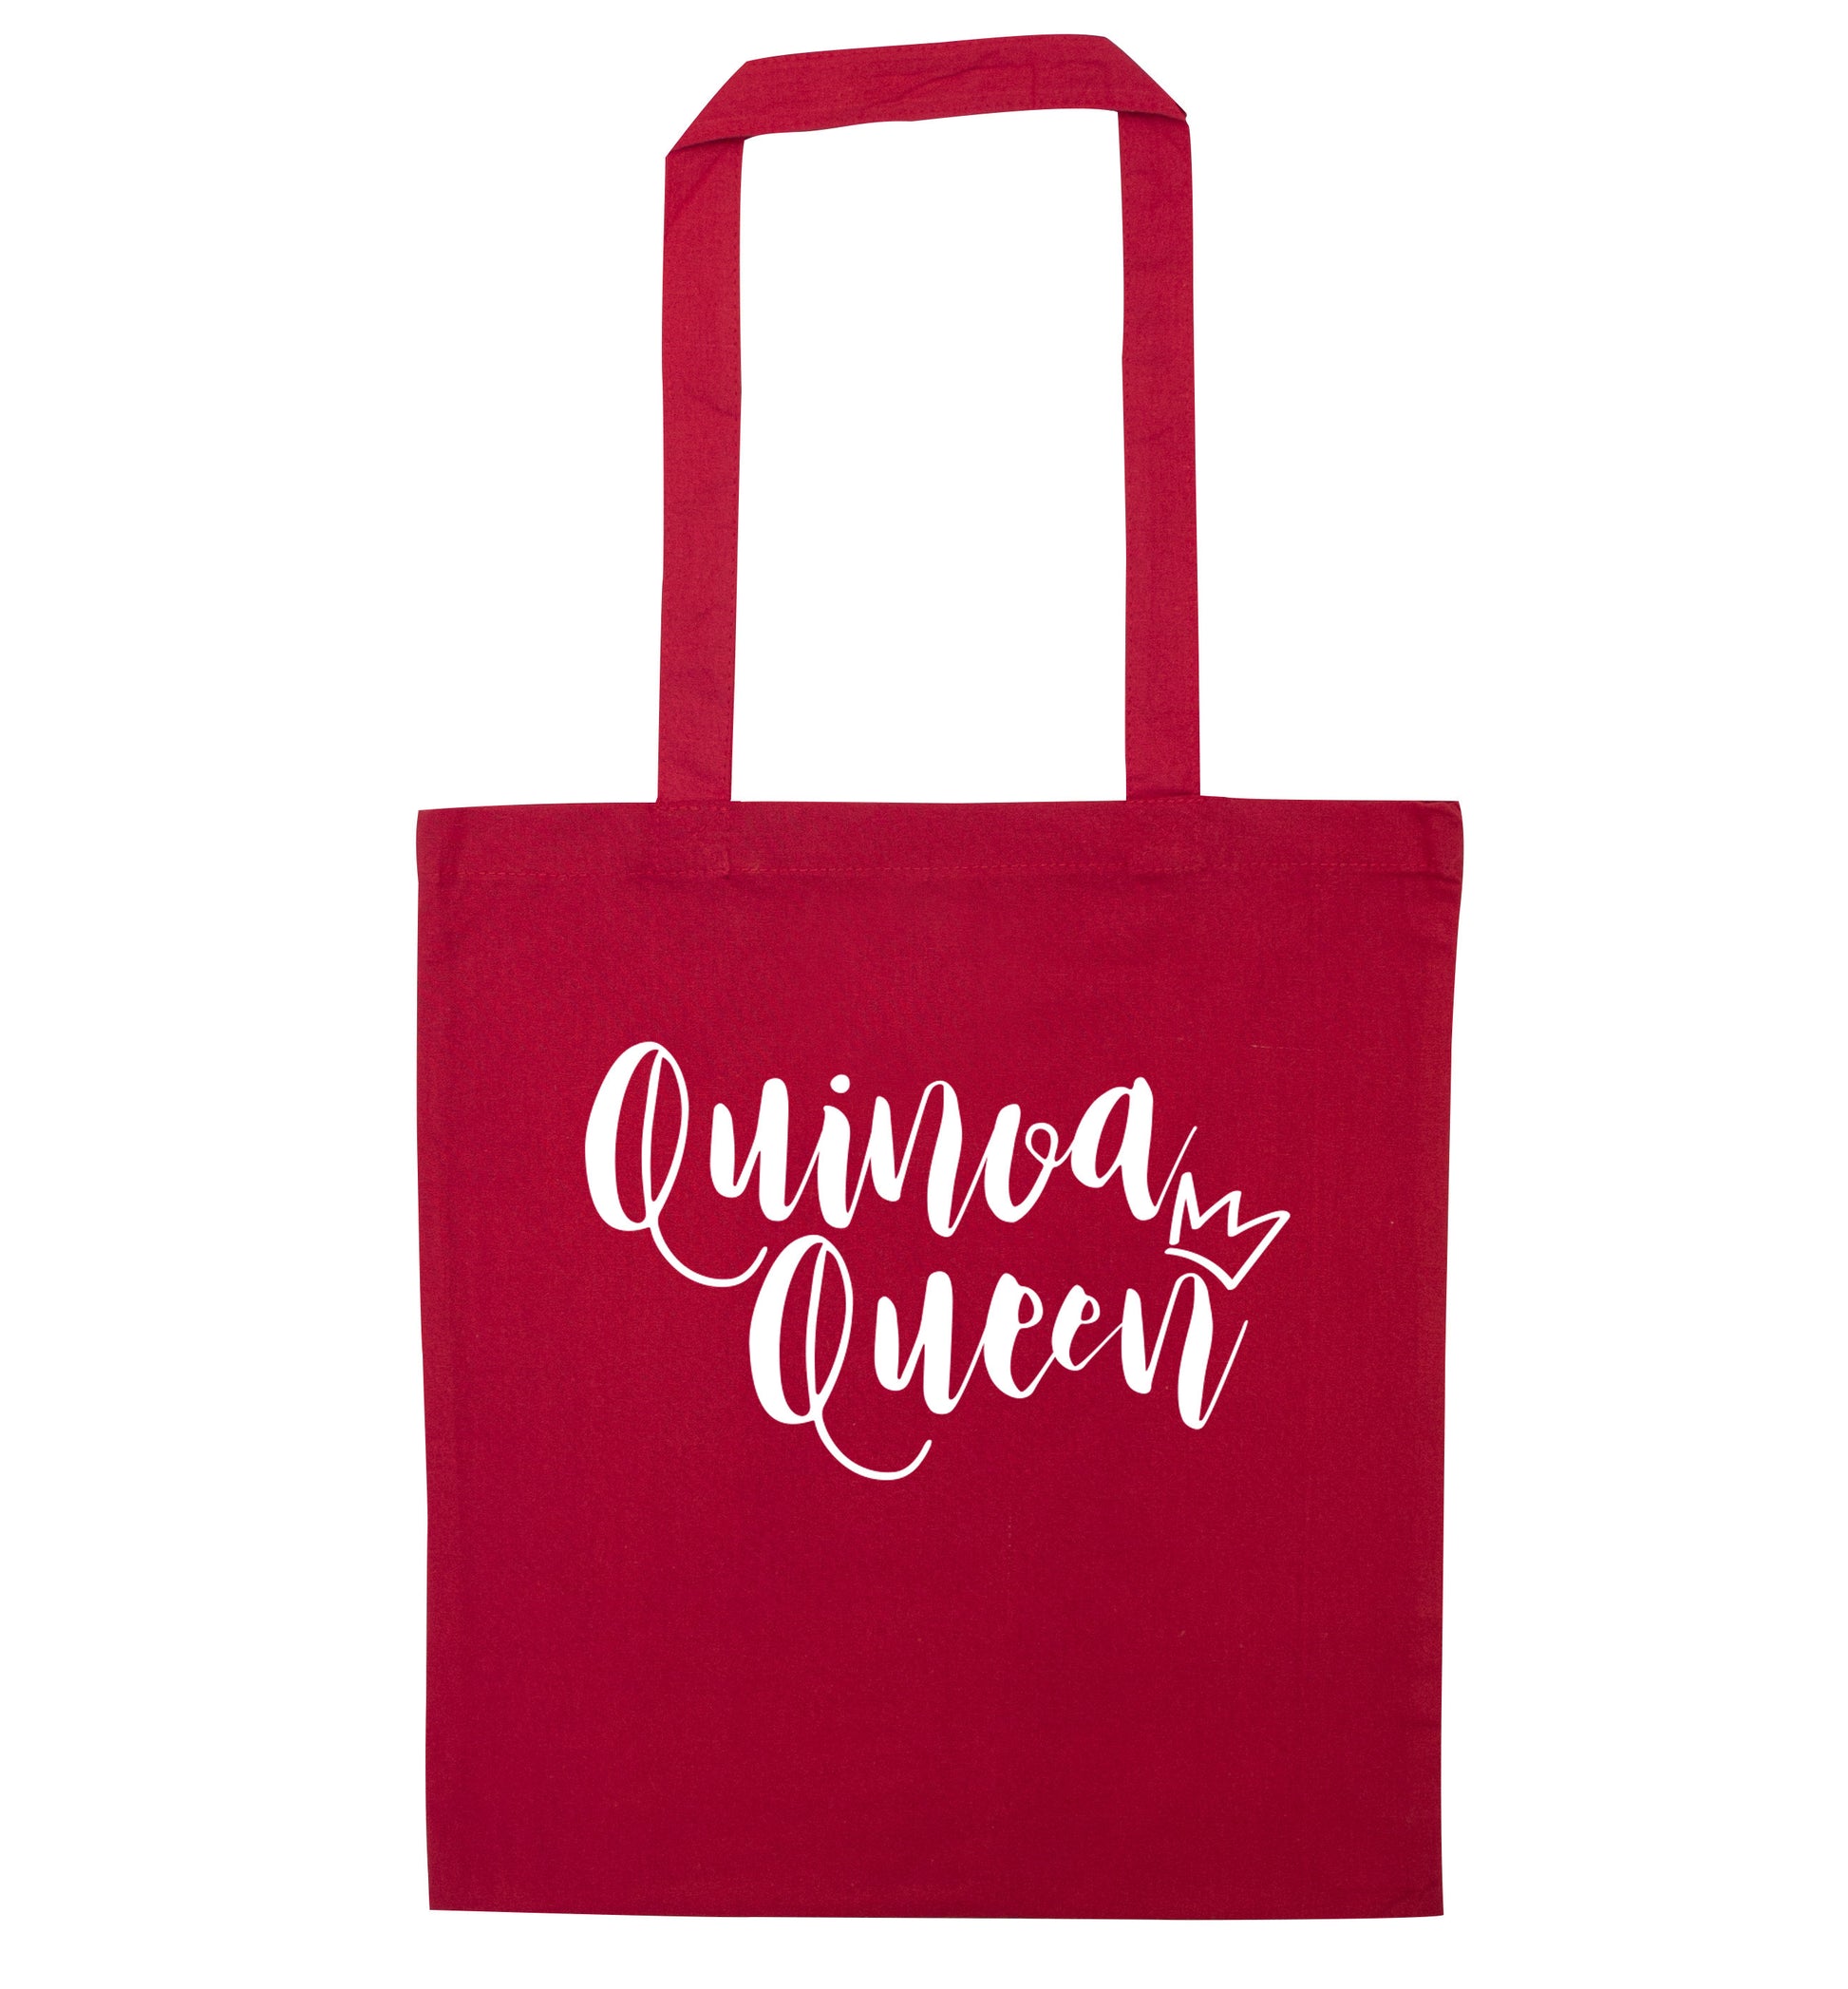 Quinoa Queen red tote bag